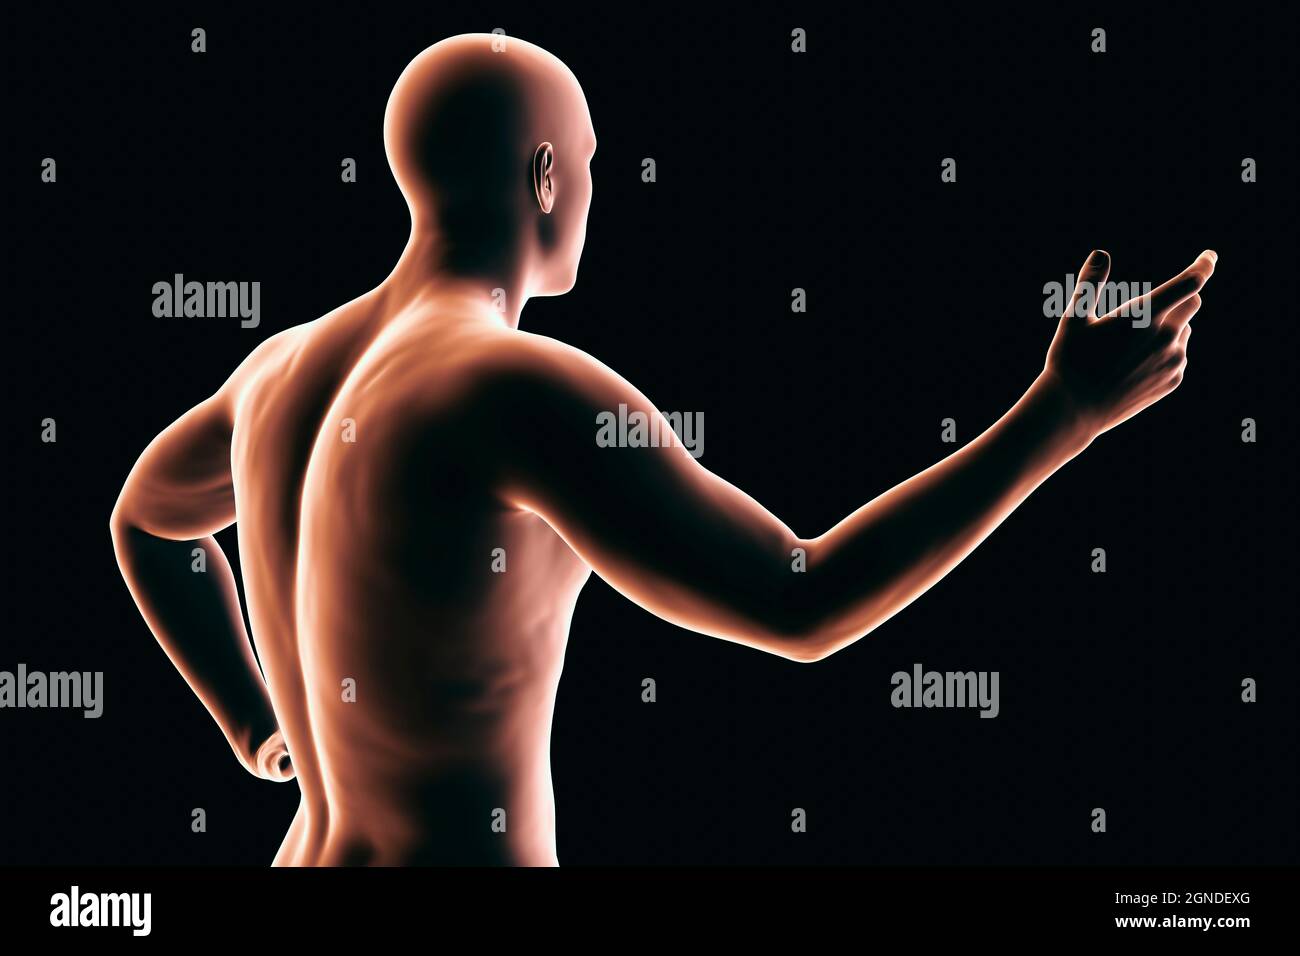 Human body, illustration Stock Photo